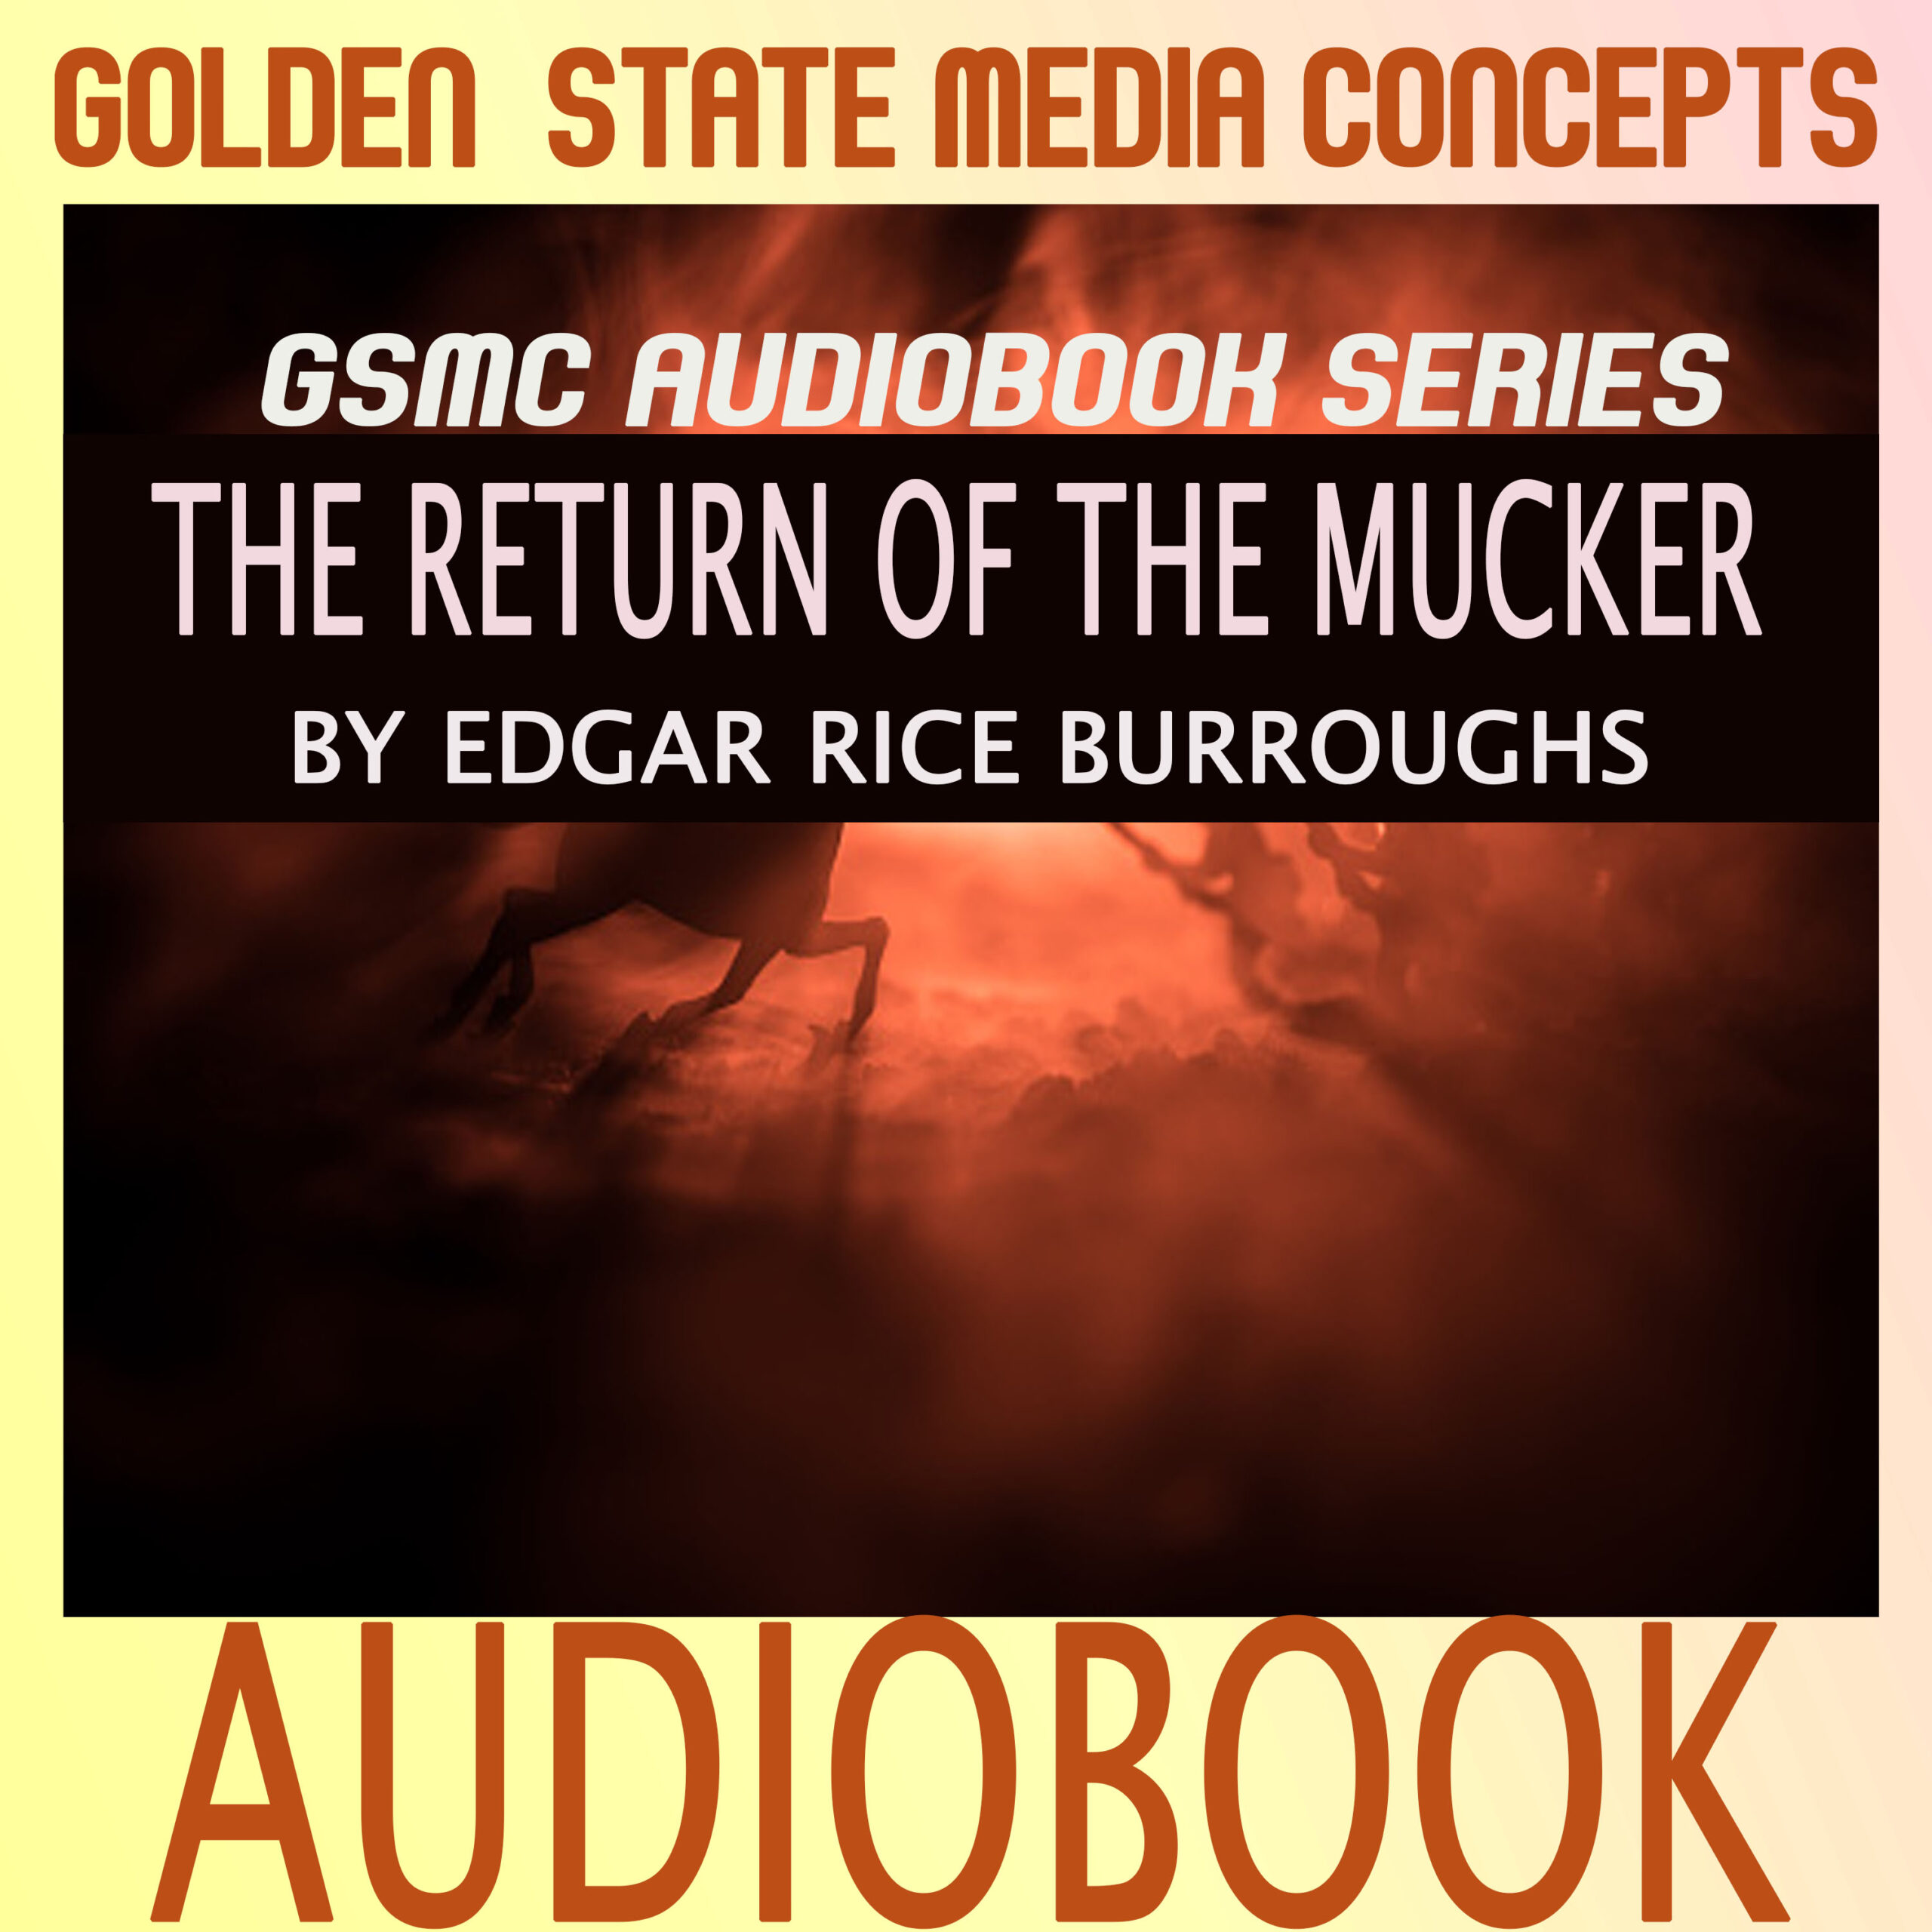 GSMC Audiobook Series: The Return of the Mucker